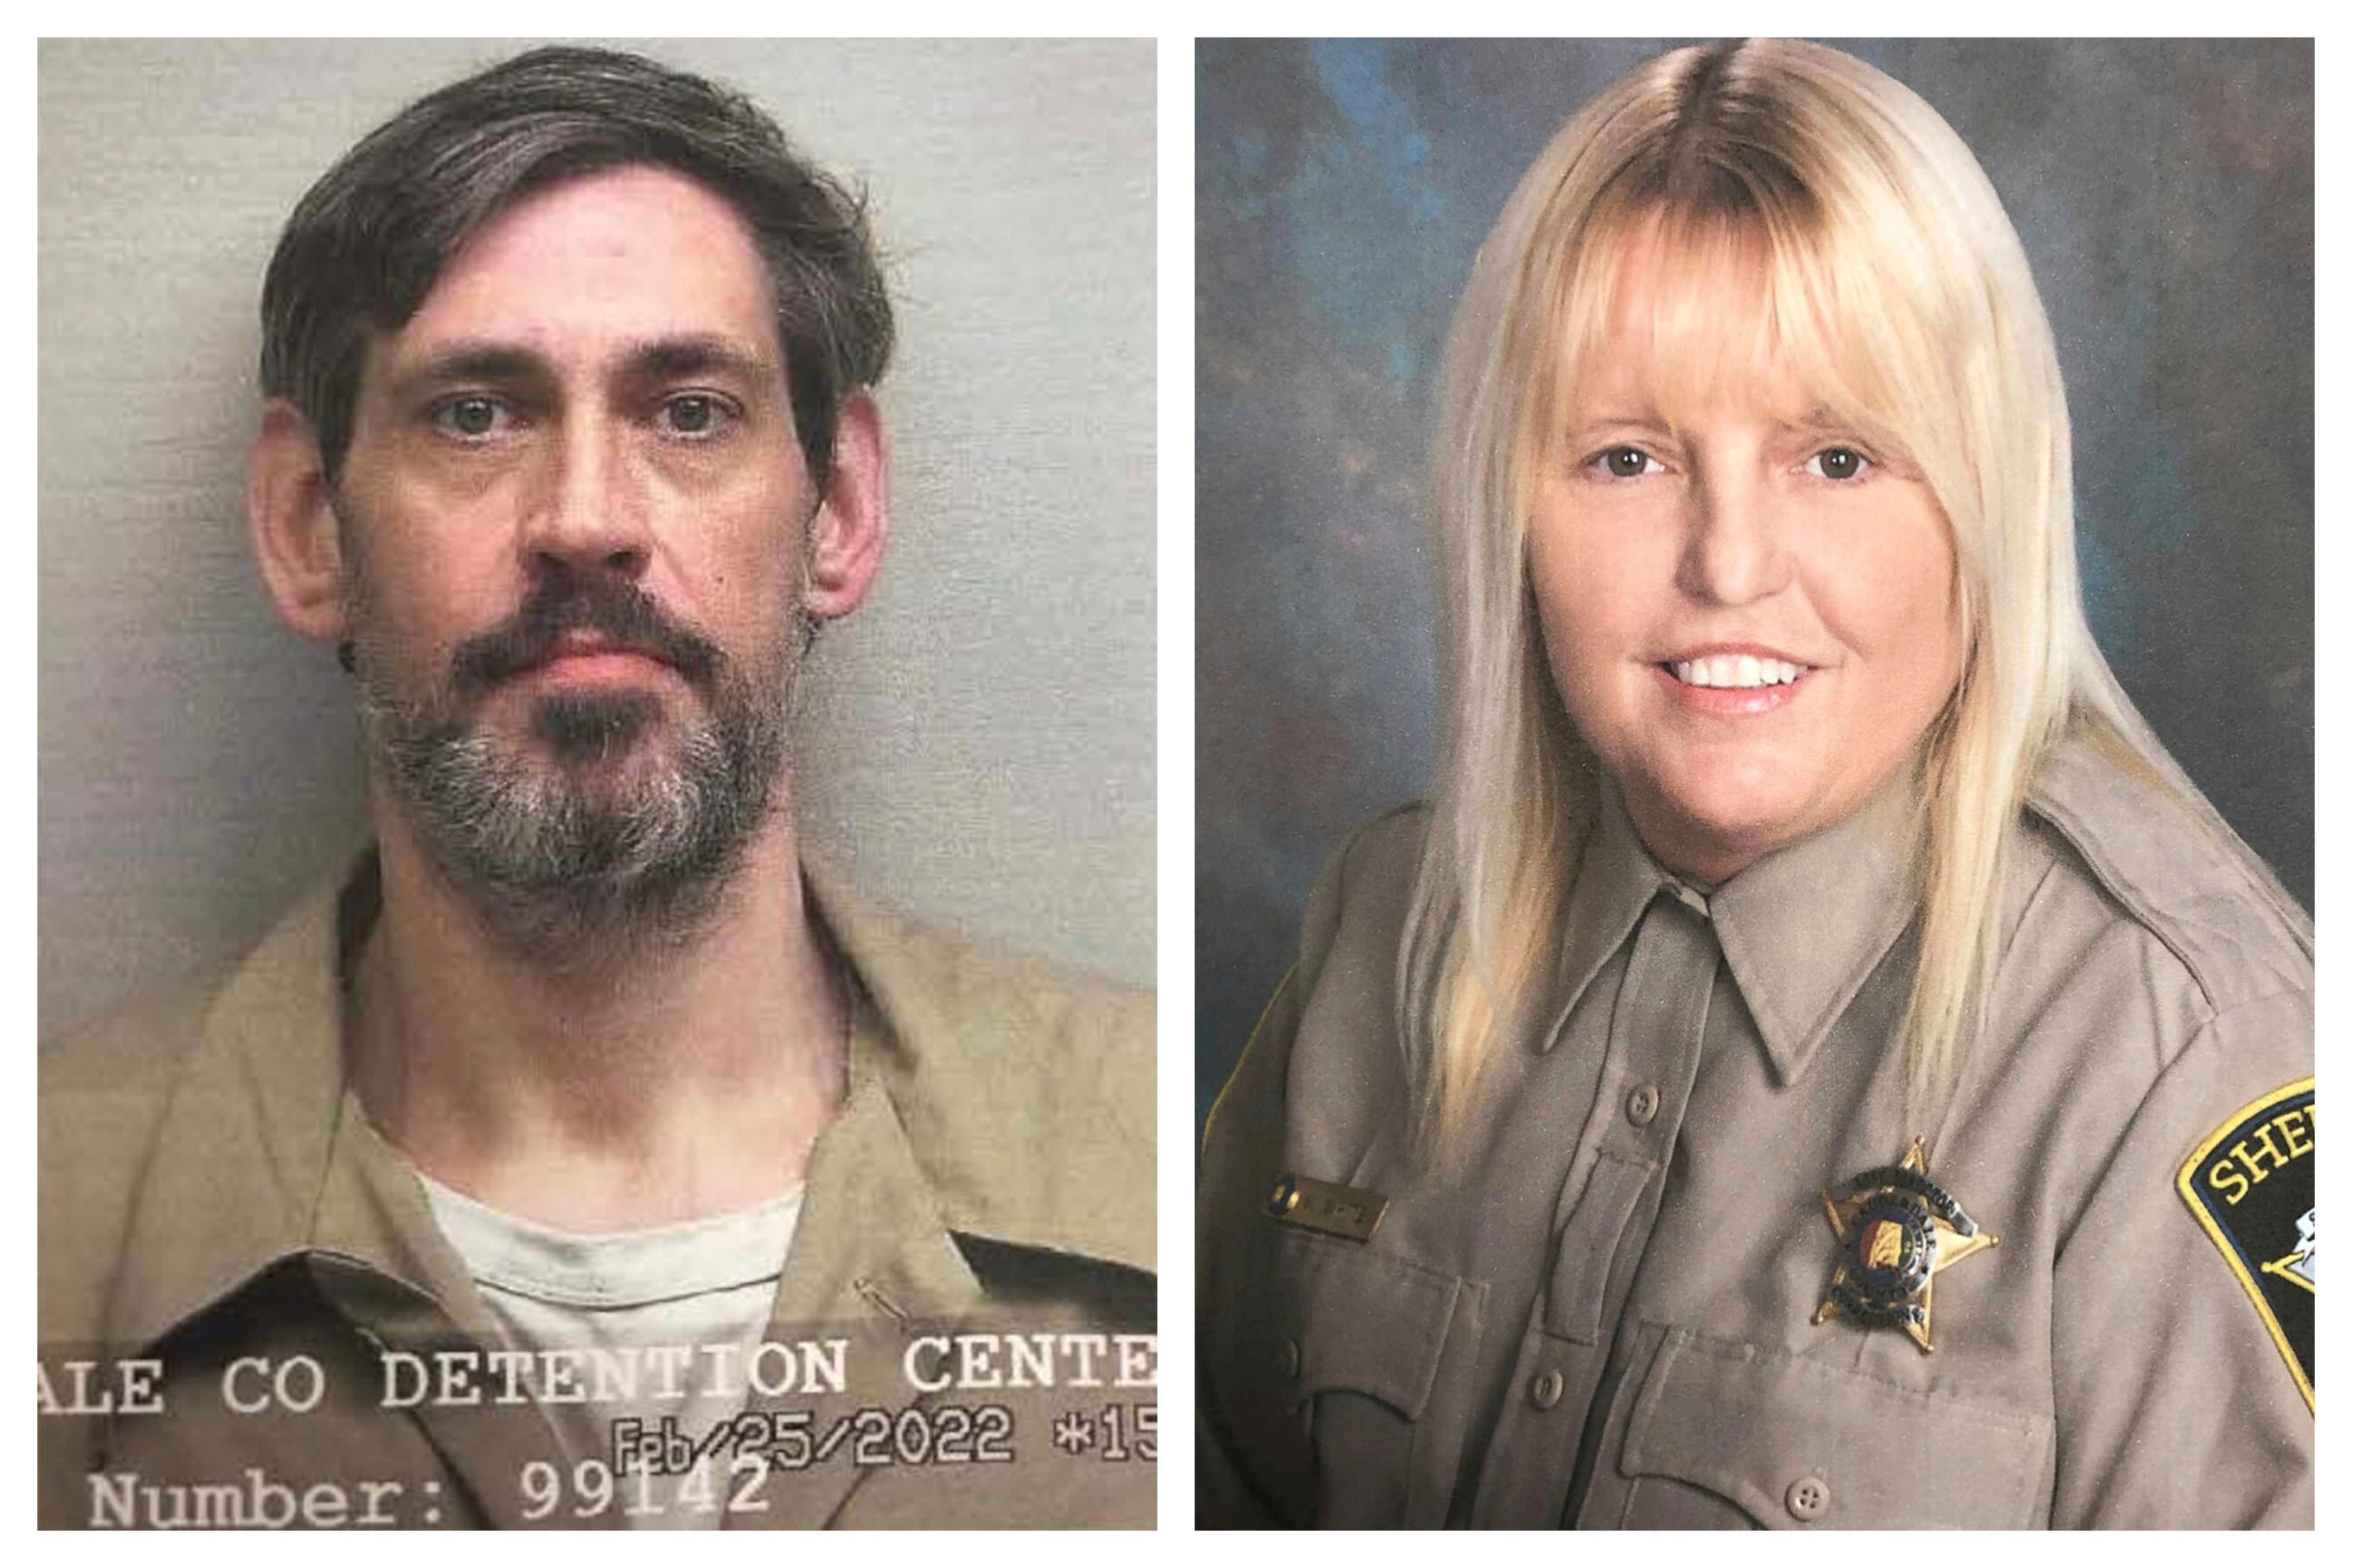 Casey Cole White and prison officer Vicki White